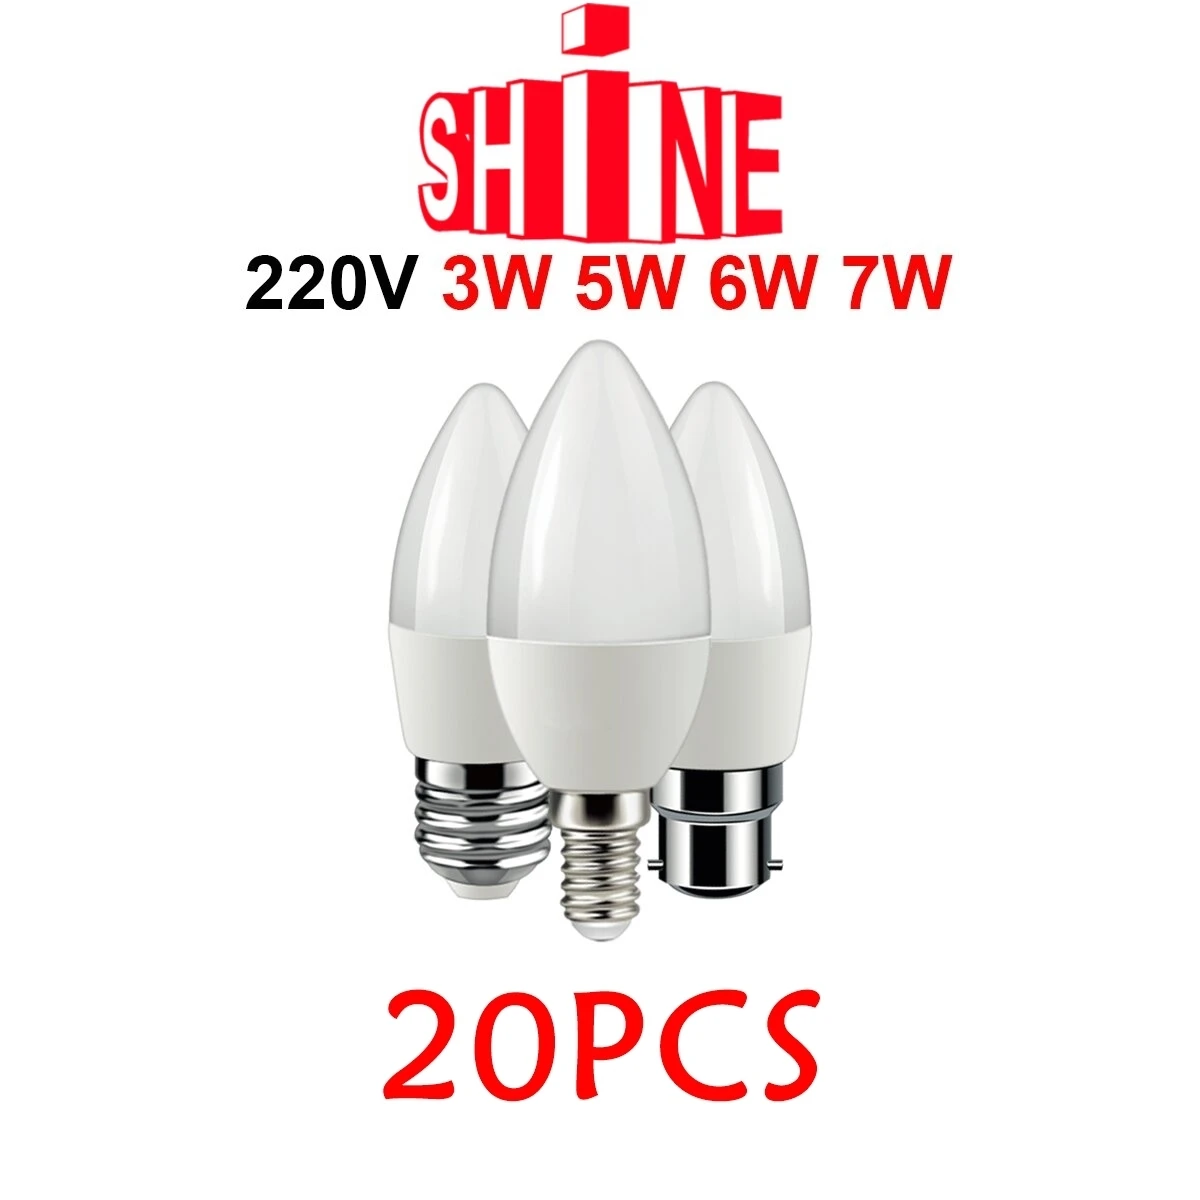 

20 Piece Led Candle Bulb C37 3w 5w 6w 7w Warm White Cold White Day Light B22 E14 E27 AC220v-240v 6000k For Home Decoration Lamp